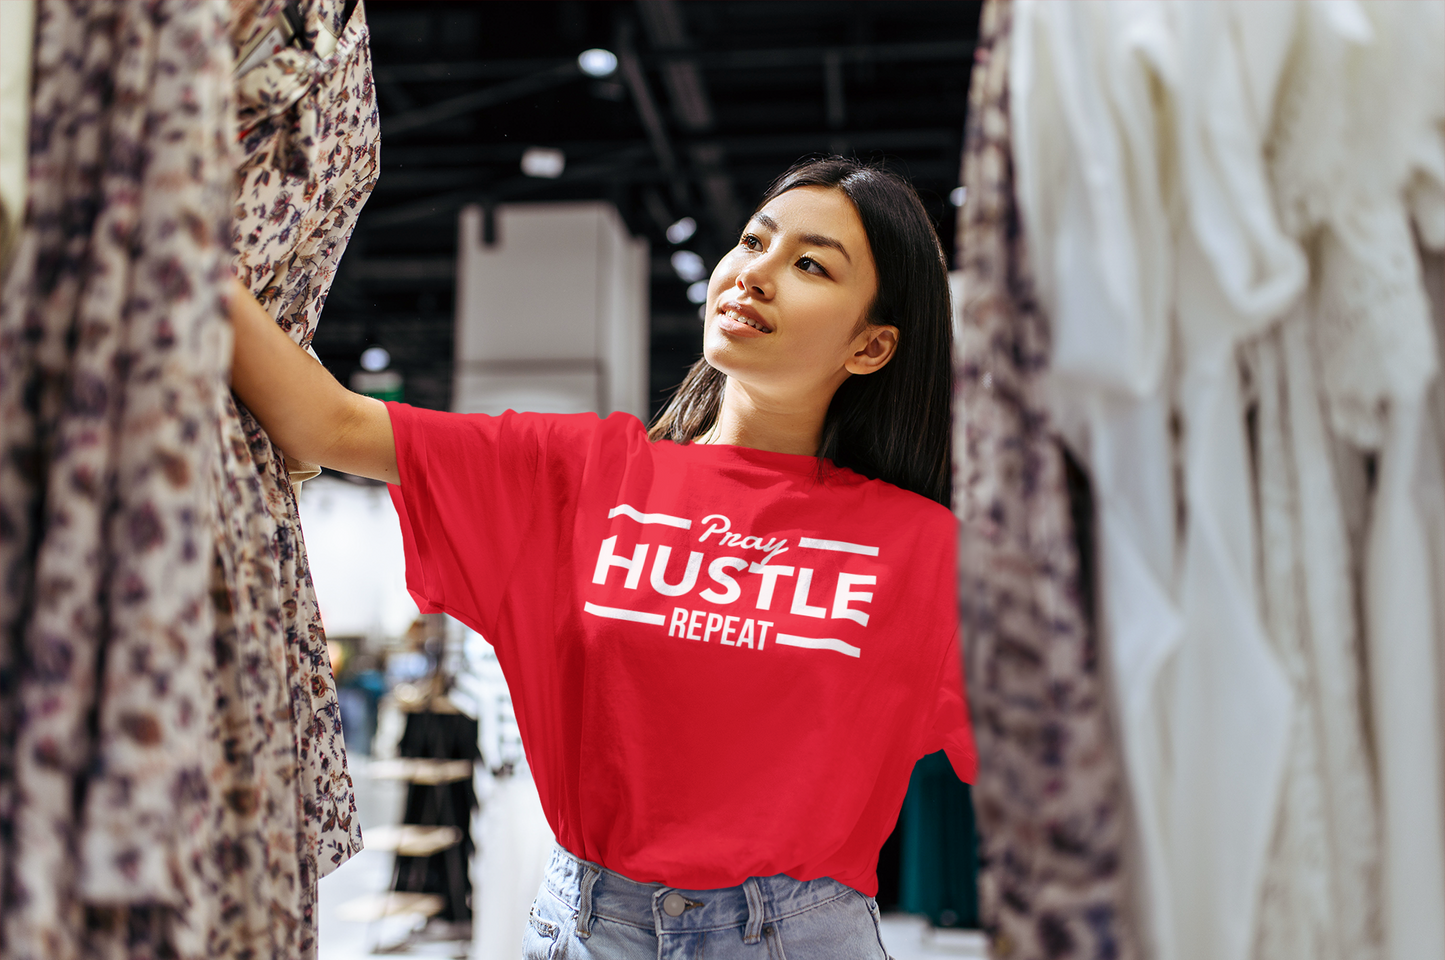 Pray Hustle Repeat T-shirt